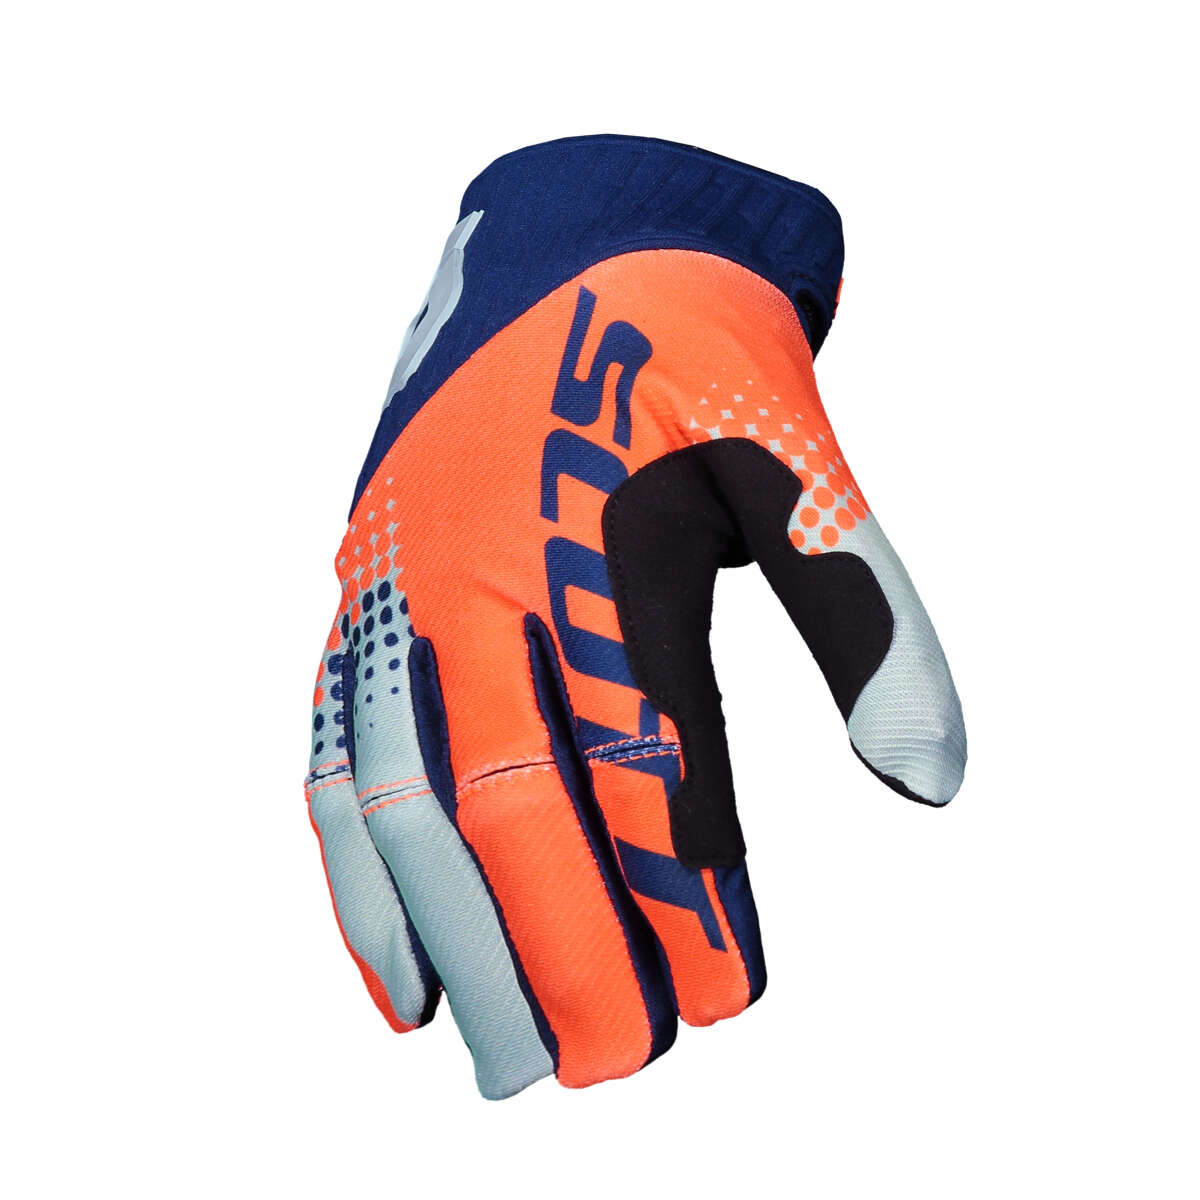 Scott Handschuhe 450 Angled Orange/Blau